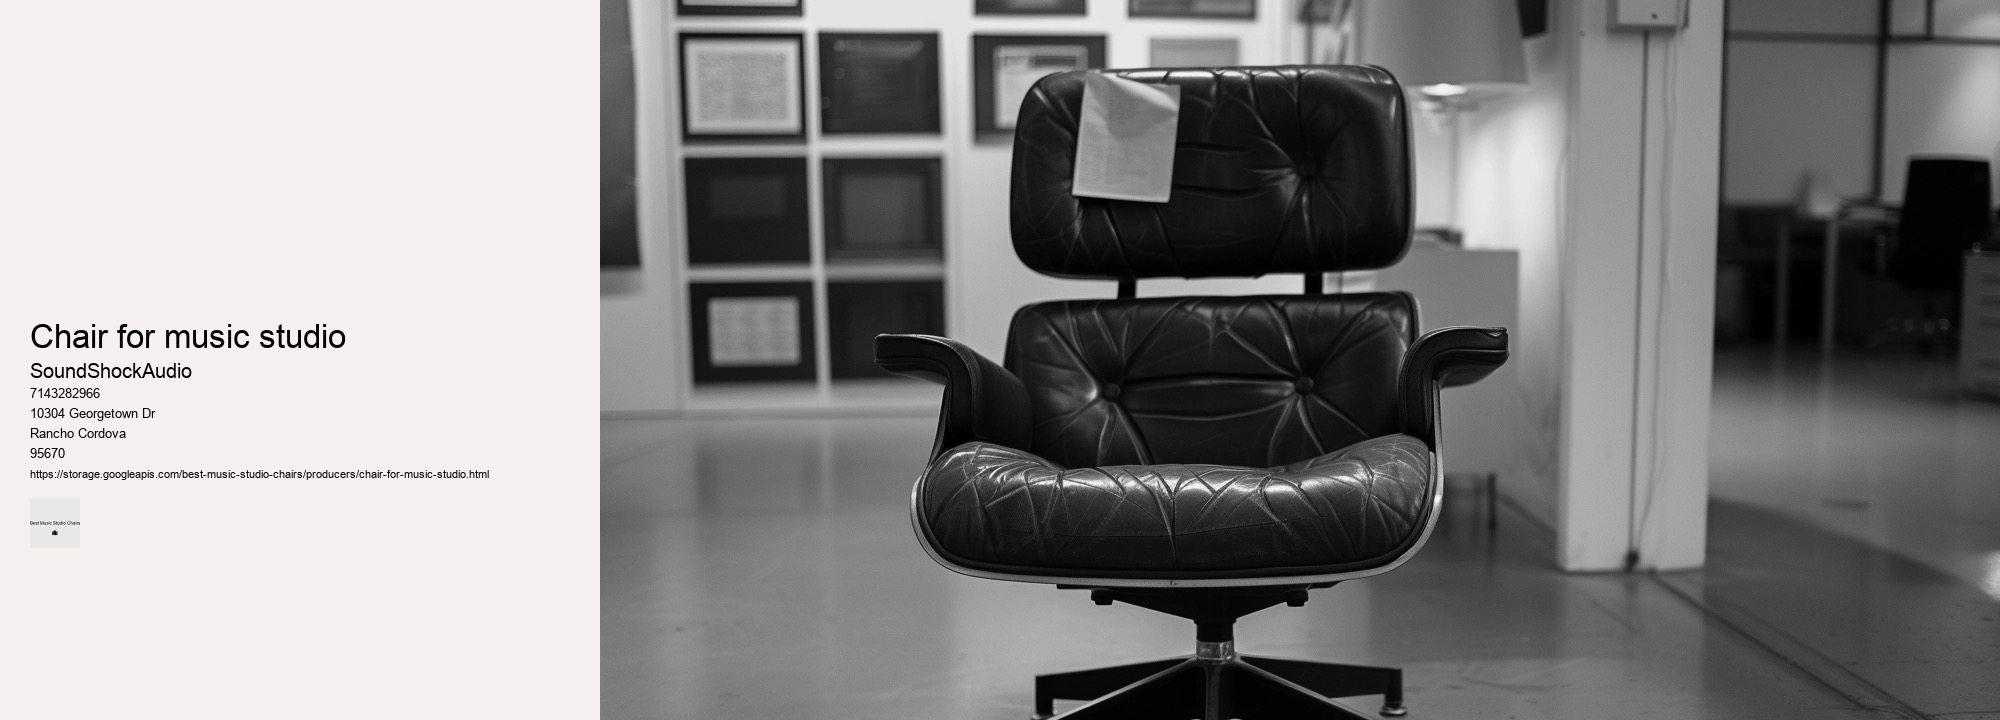 chair for music studio